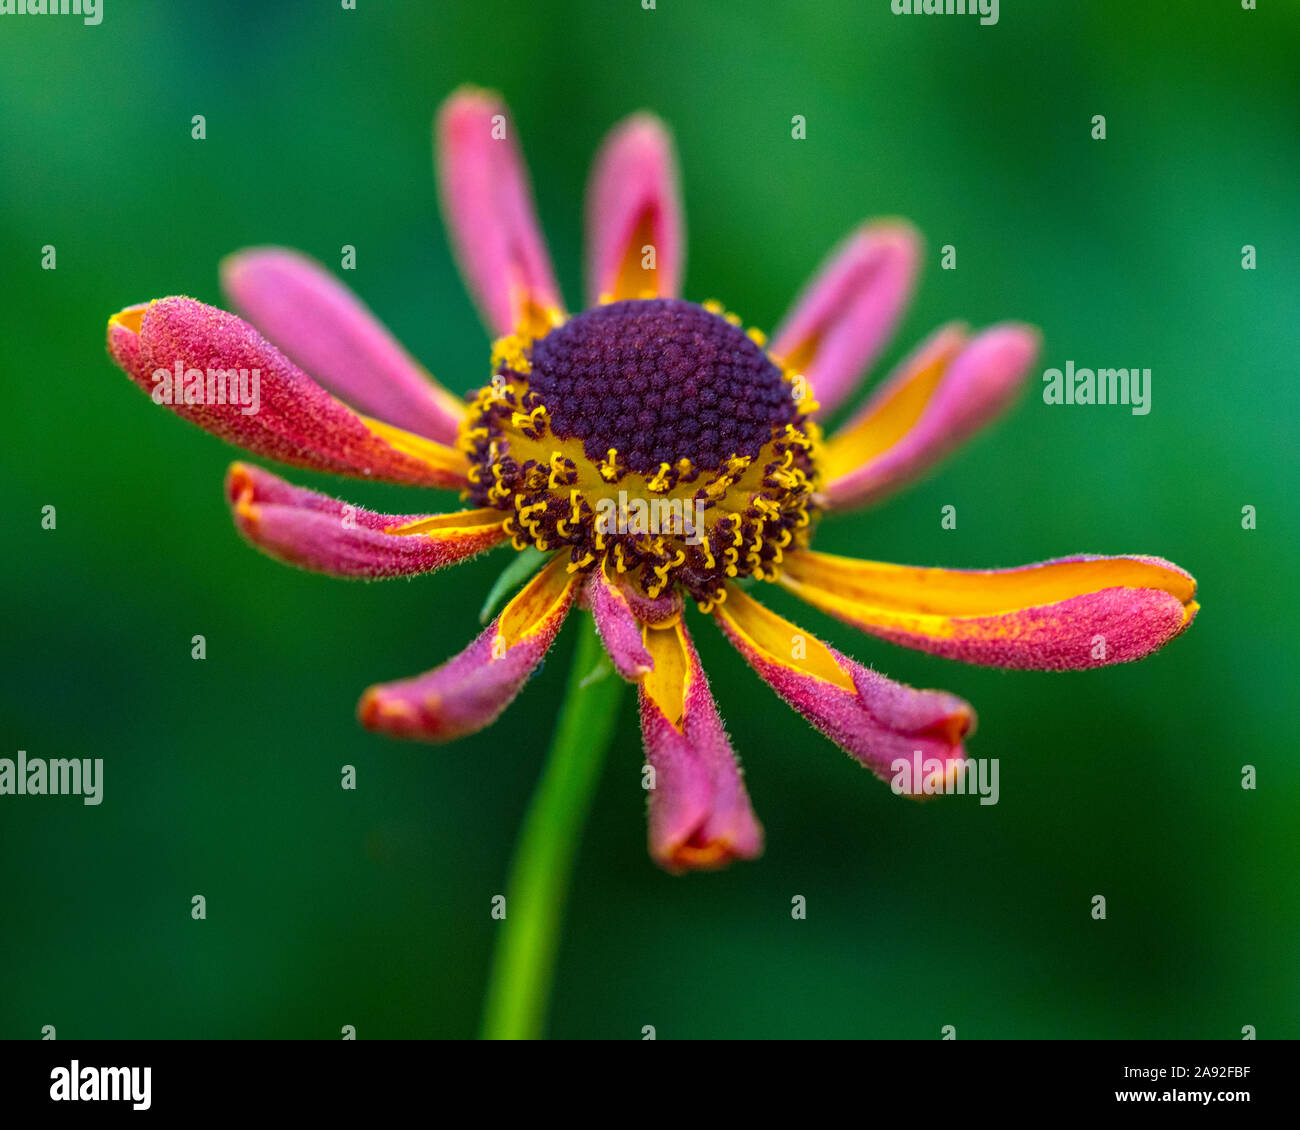 A close-up of a beautiful Helenium Waltraut flower. Stock Photo